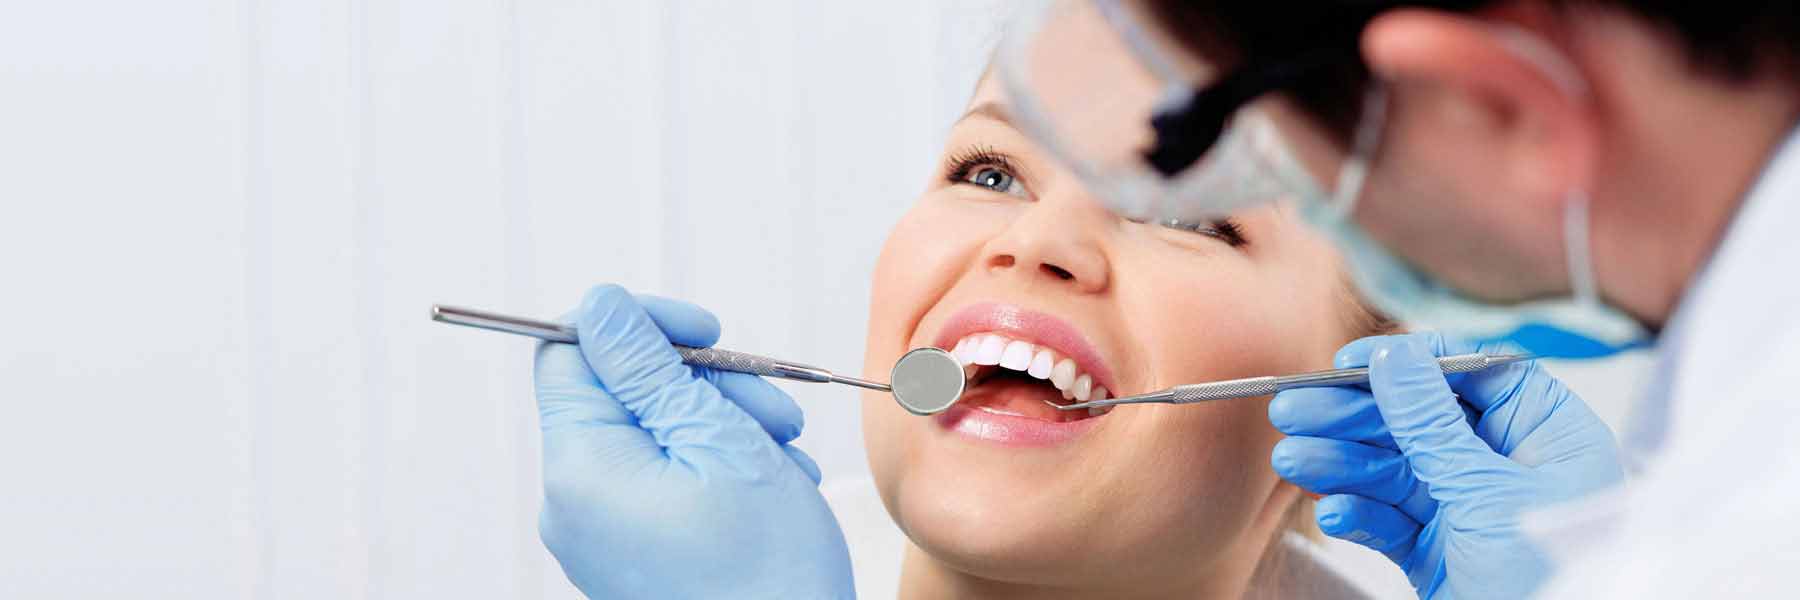 Dental Service in Morpeth - Tooth N Care